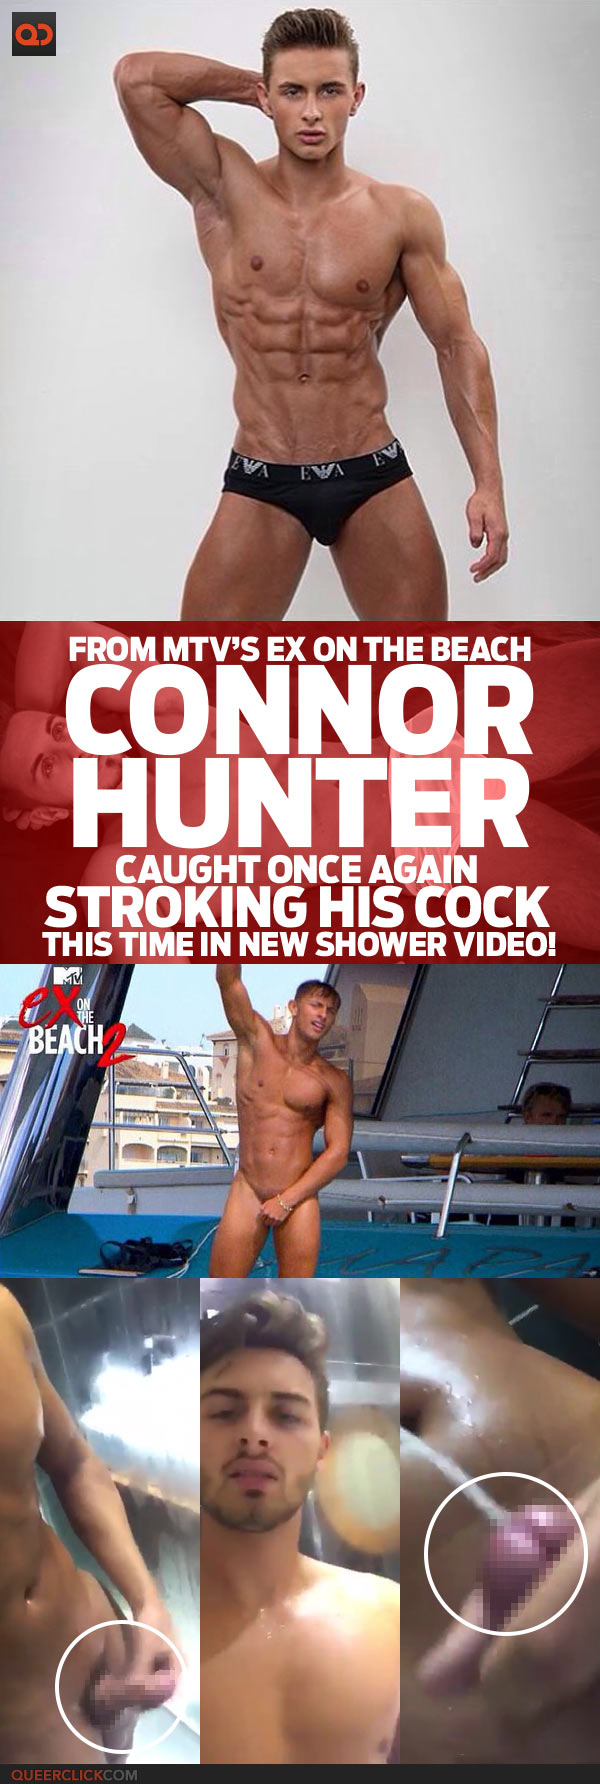 Connor hunter naked